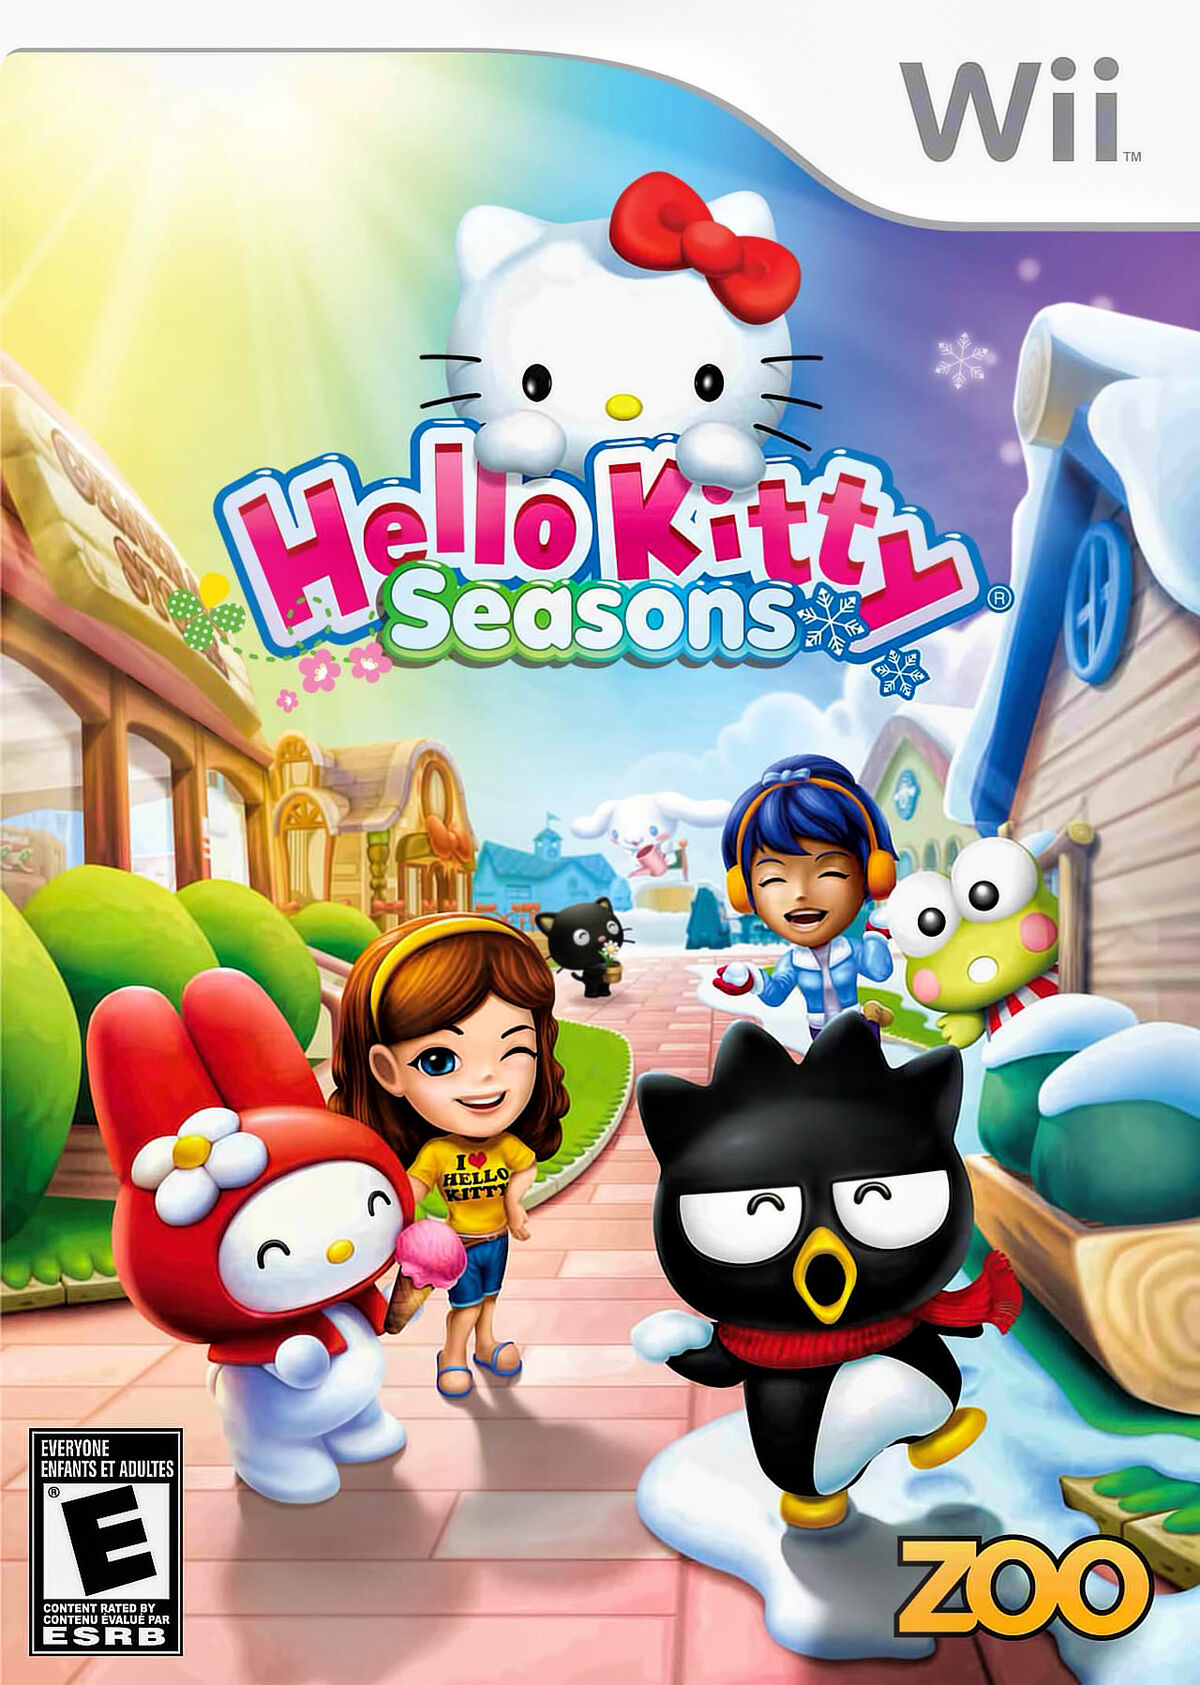 Sanrio's New Game 'Hello Kitty Island Adventure' Lands on Apple